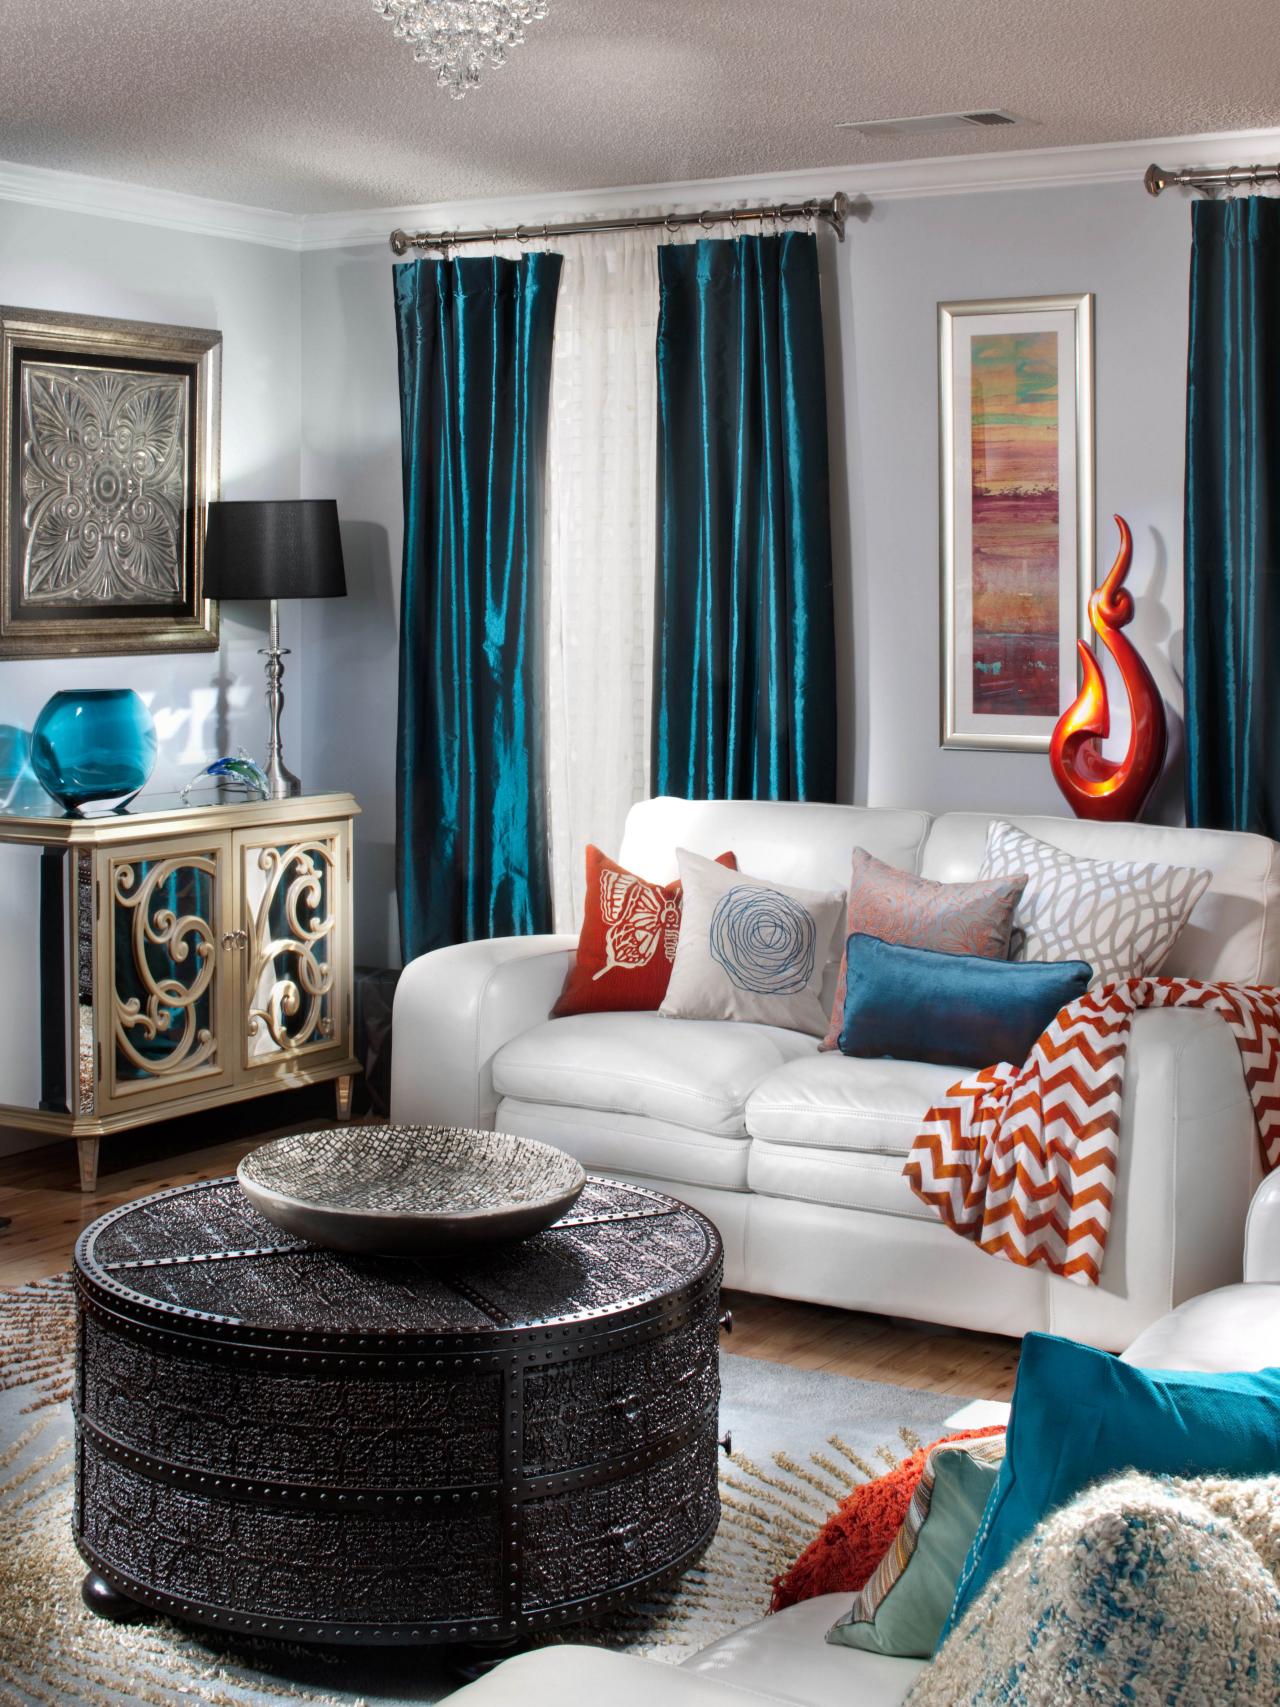 25 Transitional Living Room Design Ideas - Decoration Love